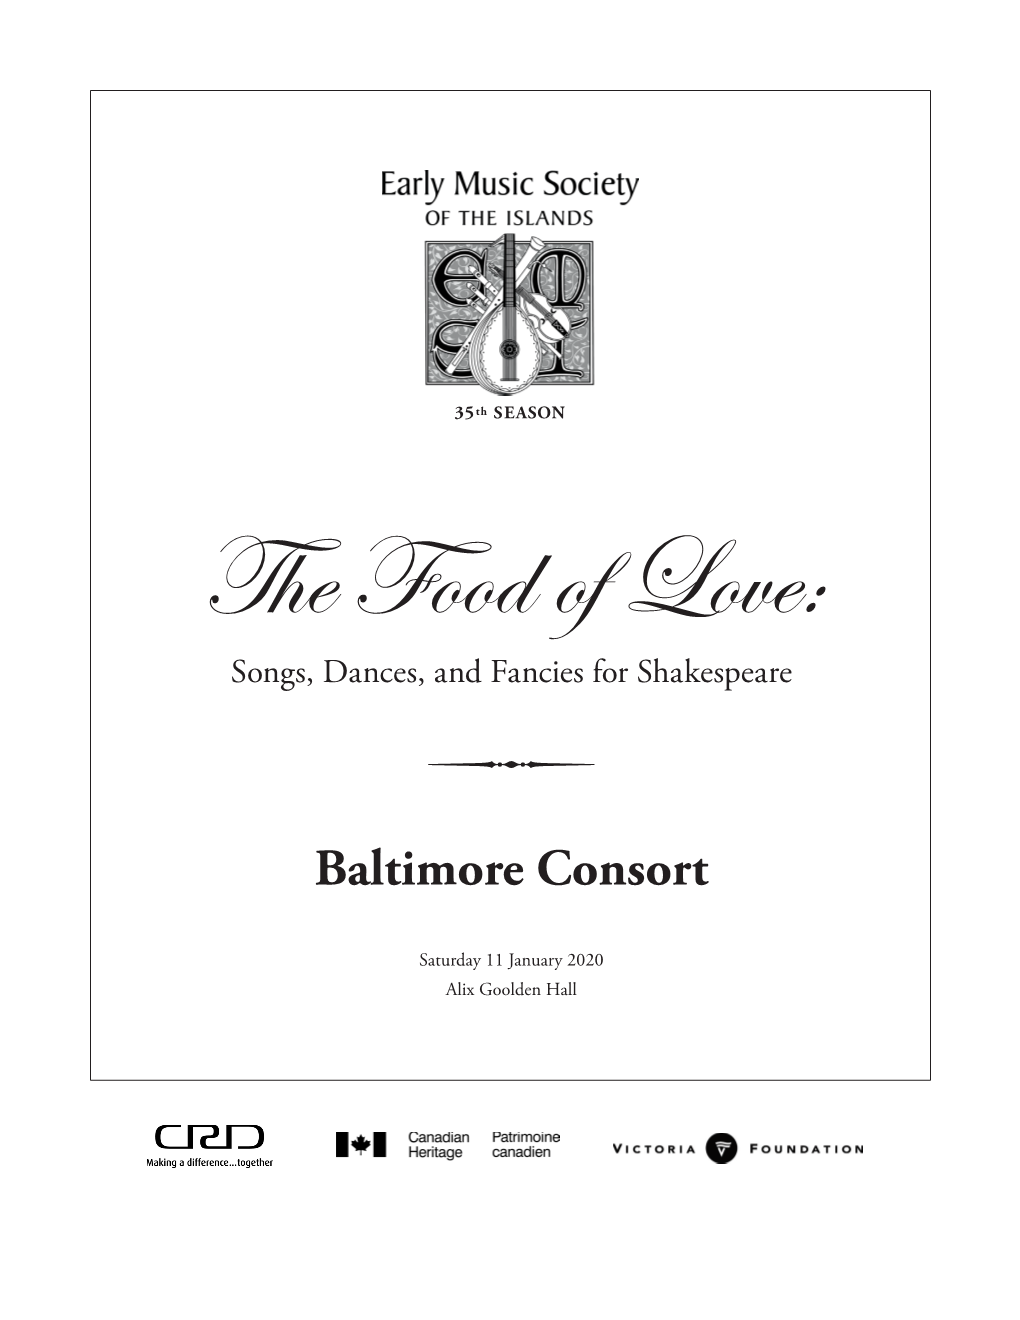 Baltimore Consort